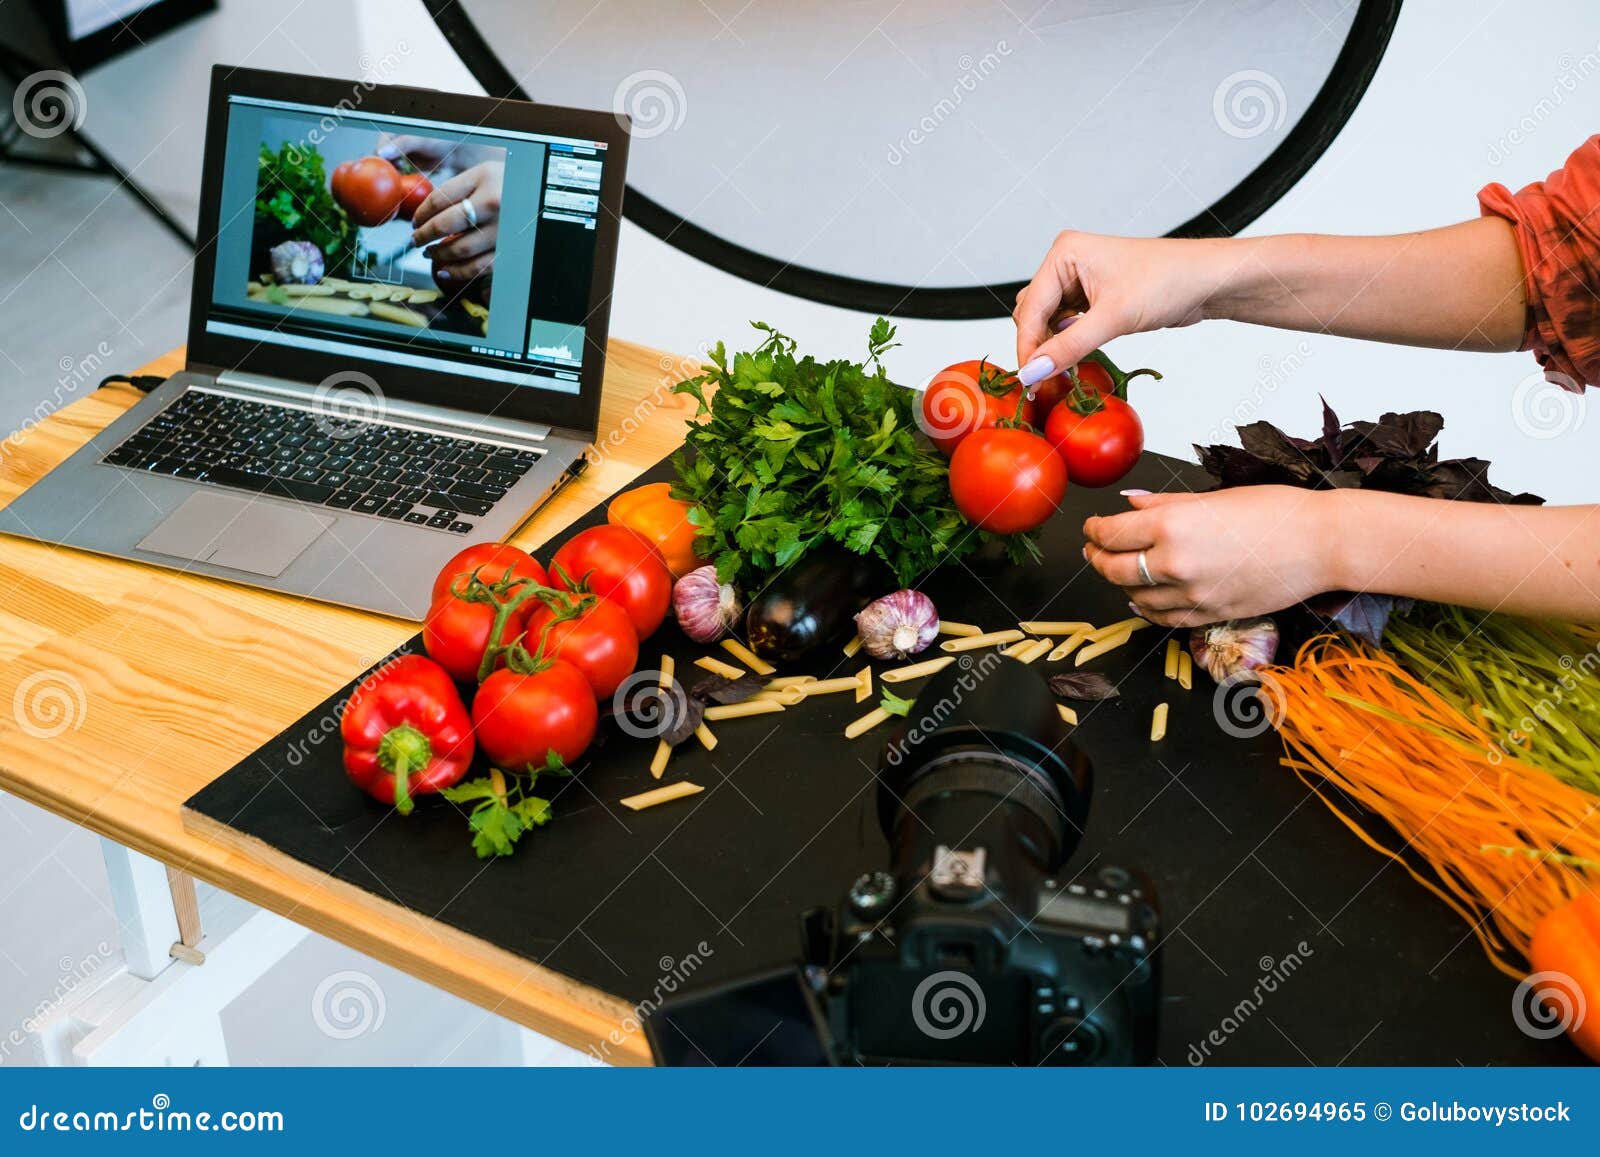 food photography laptop advertisment stylist